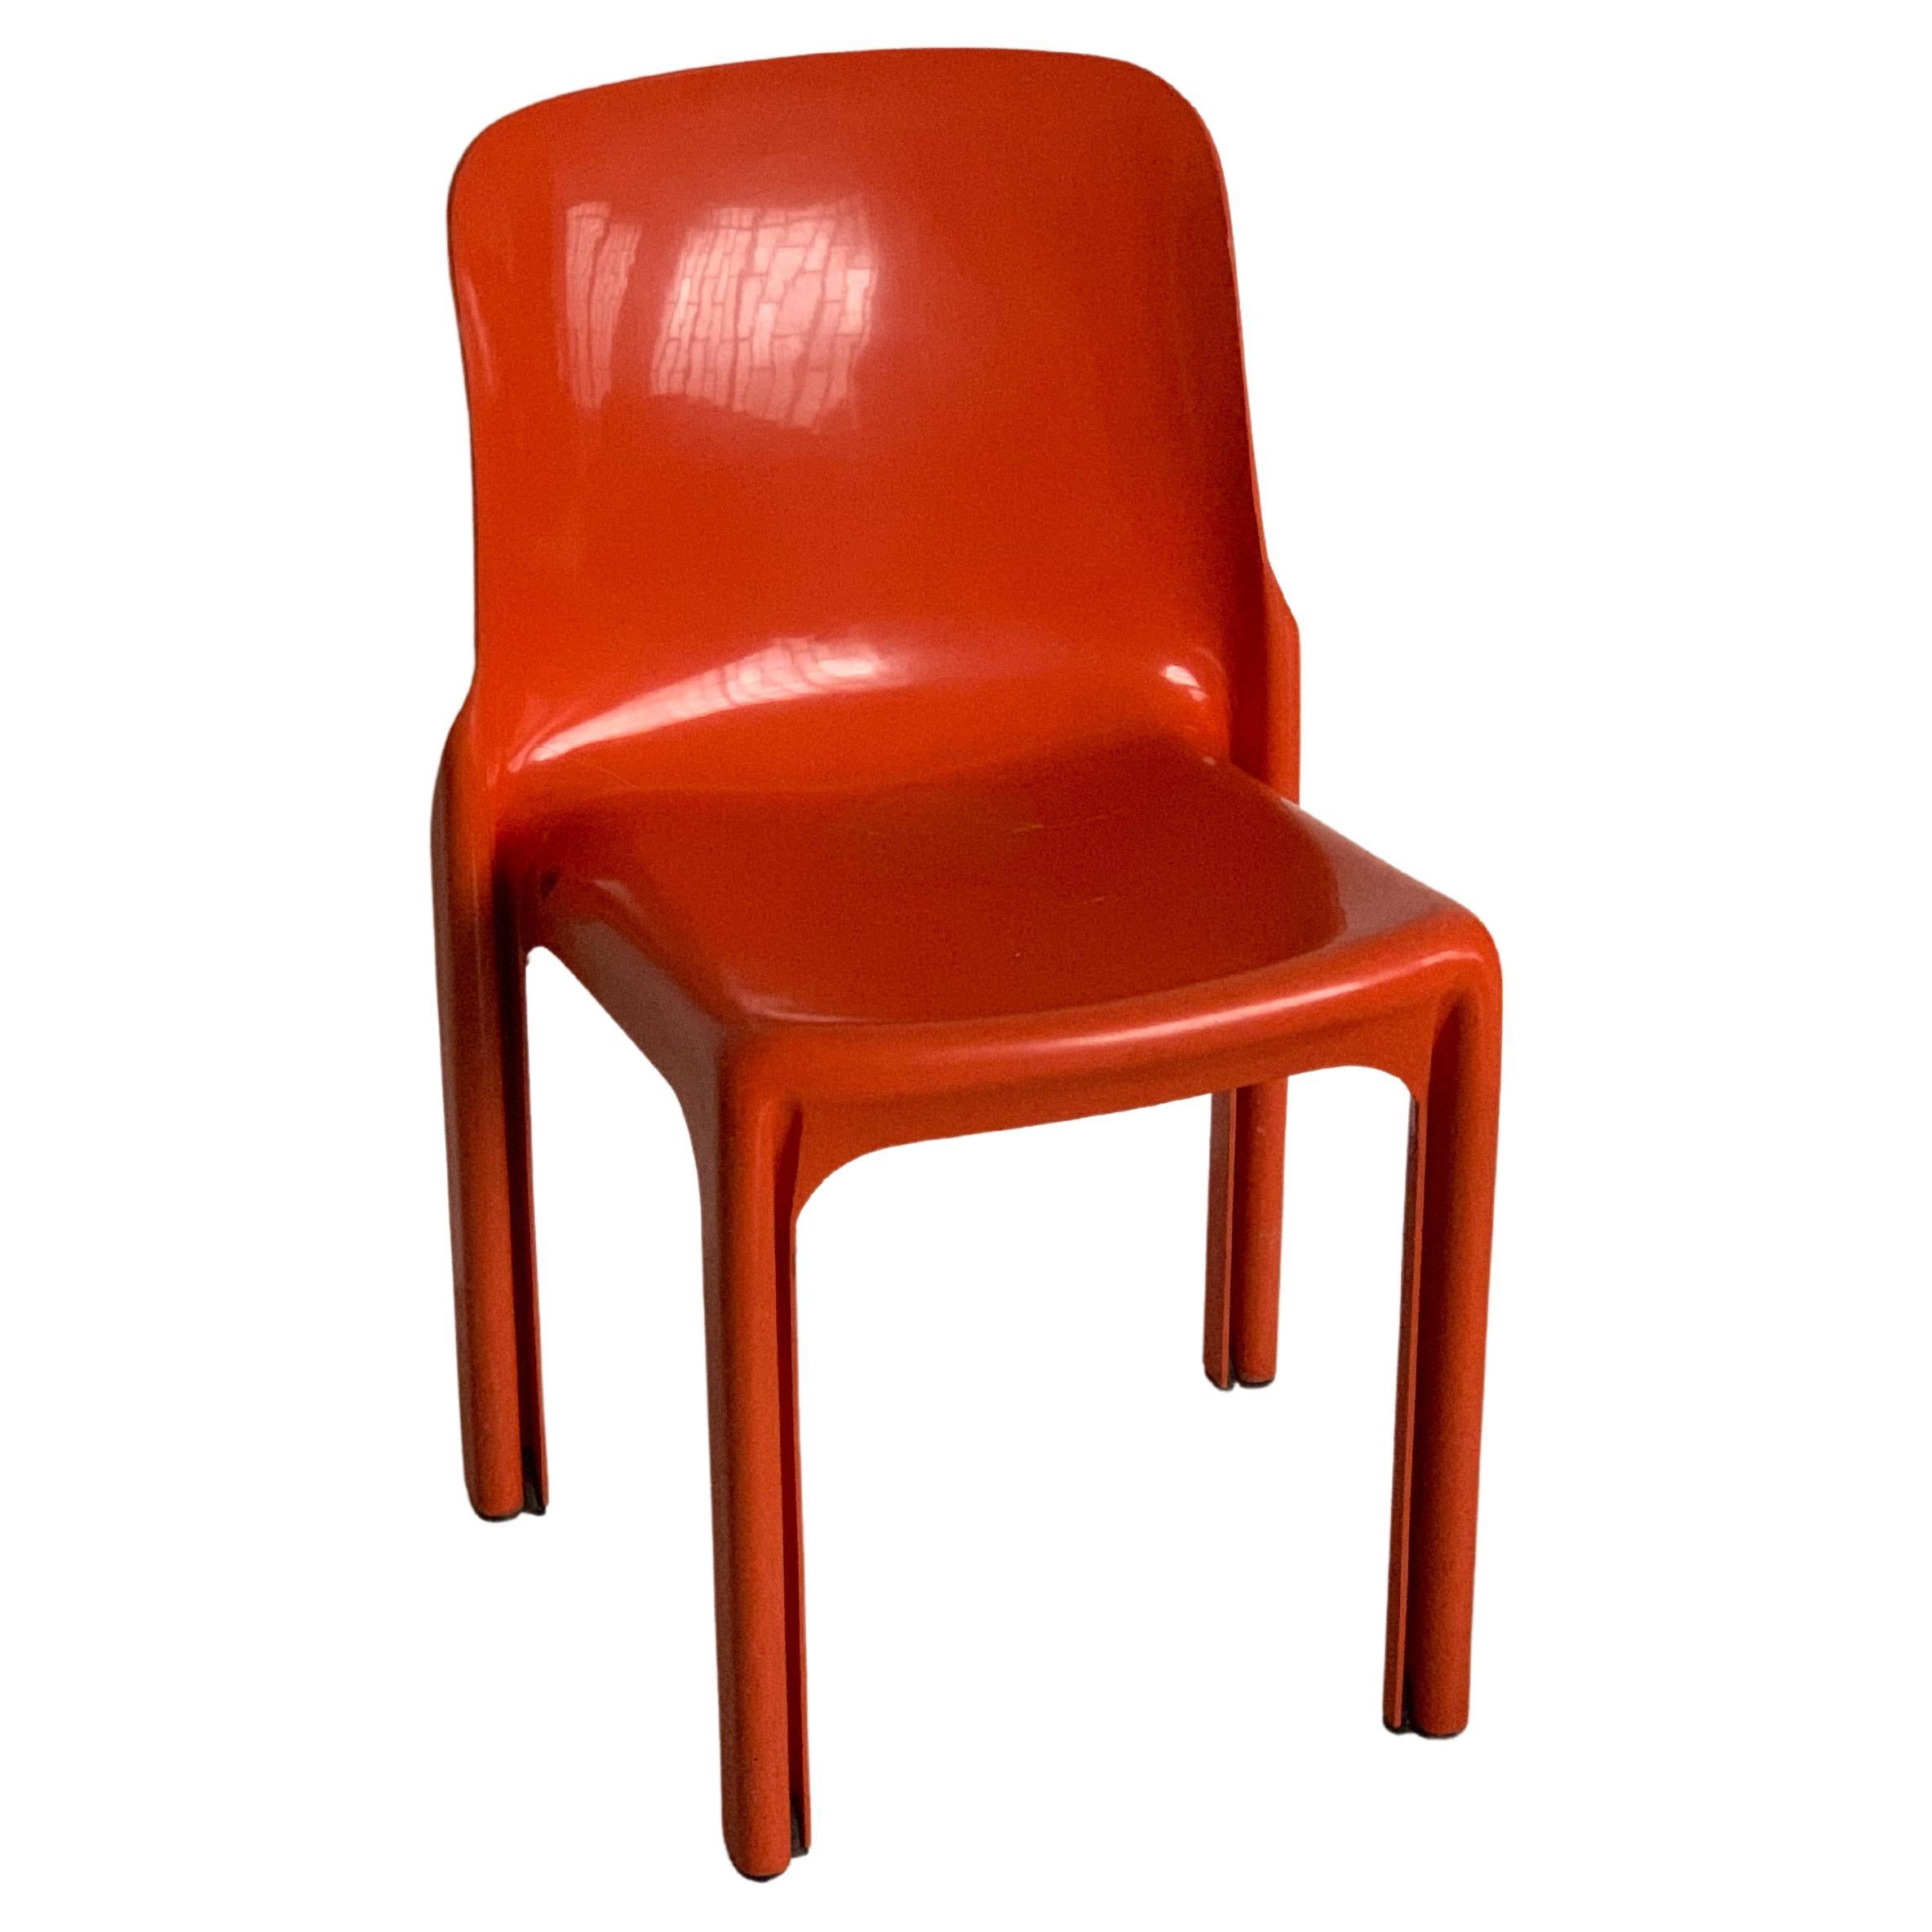 Vintage Italian Selene Chair in Orange Plastic, by Vico Magistretti for Artemide